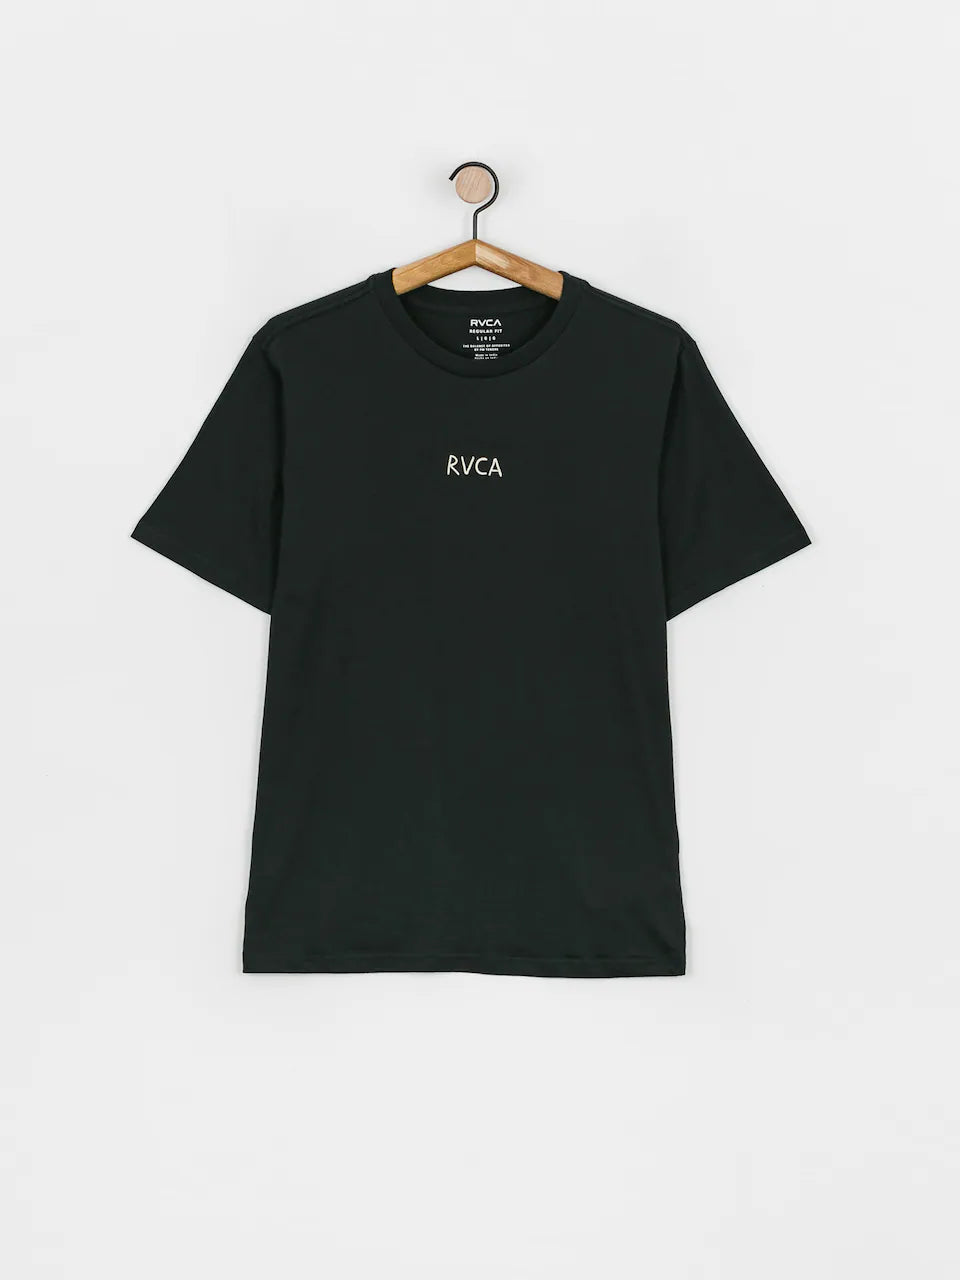 RCVA Storks Backprint T-shirt